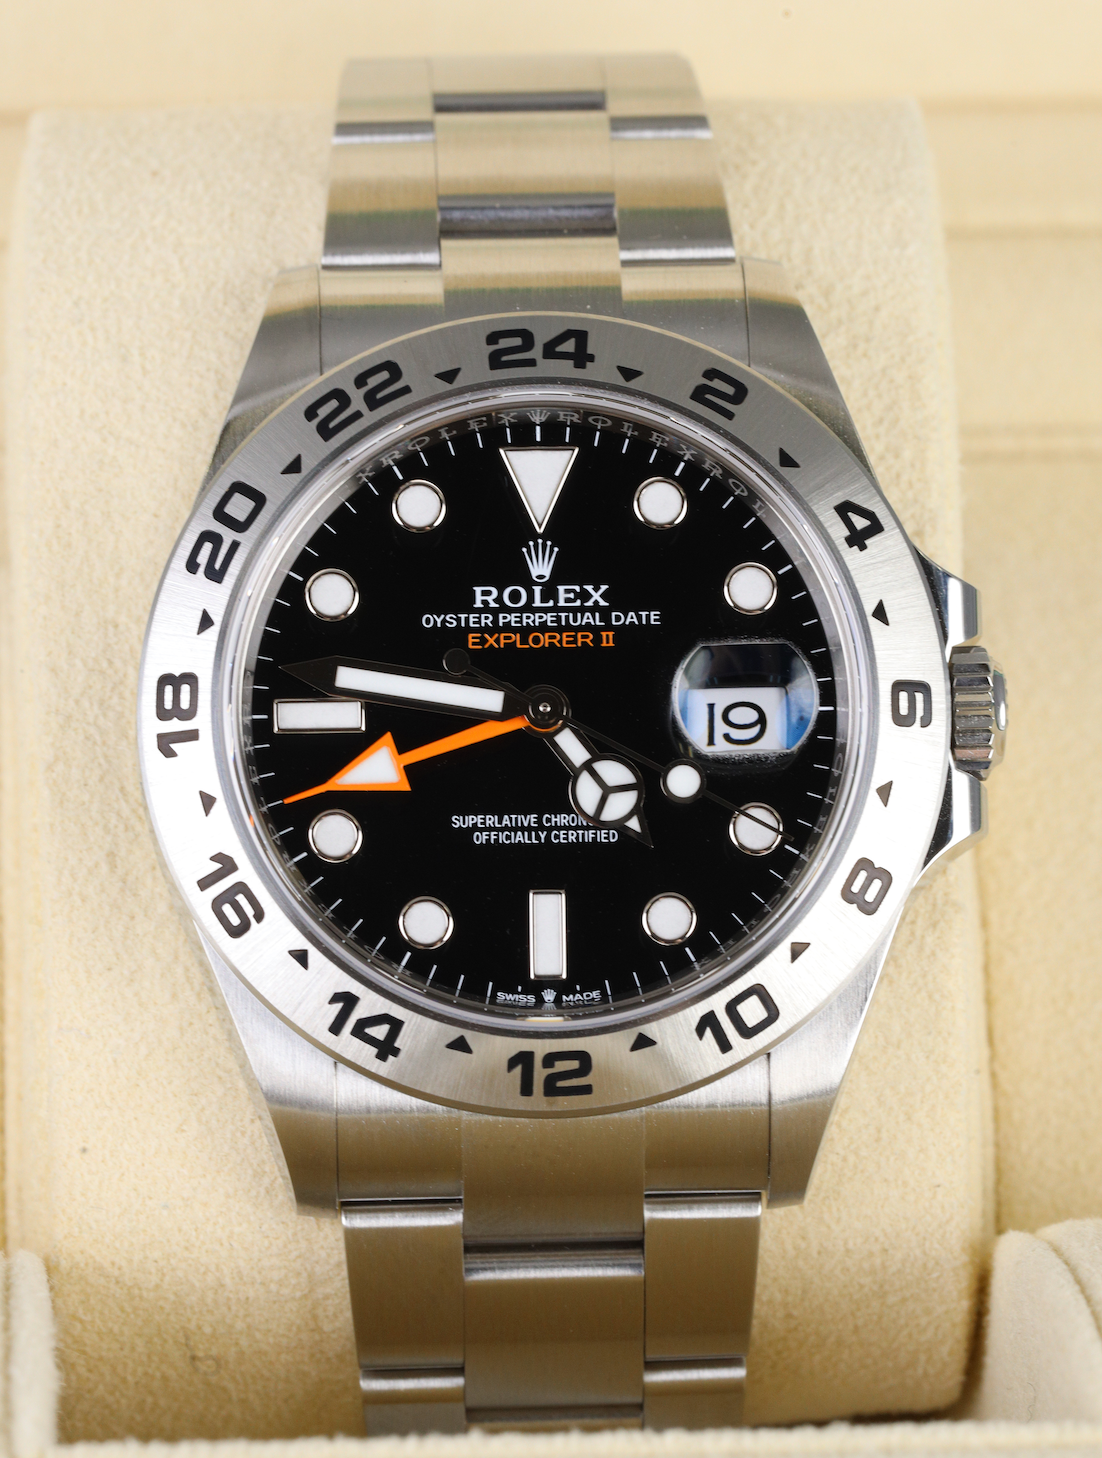 NEW AUG 2021 Rolex Explorer II 226570 42mm Black Orange Stainless Steel Watch